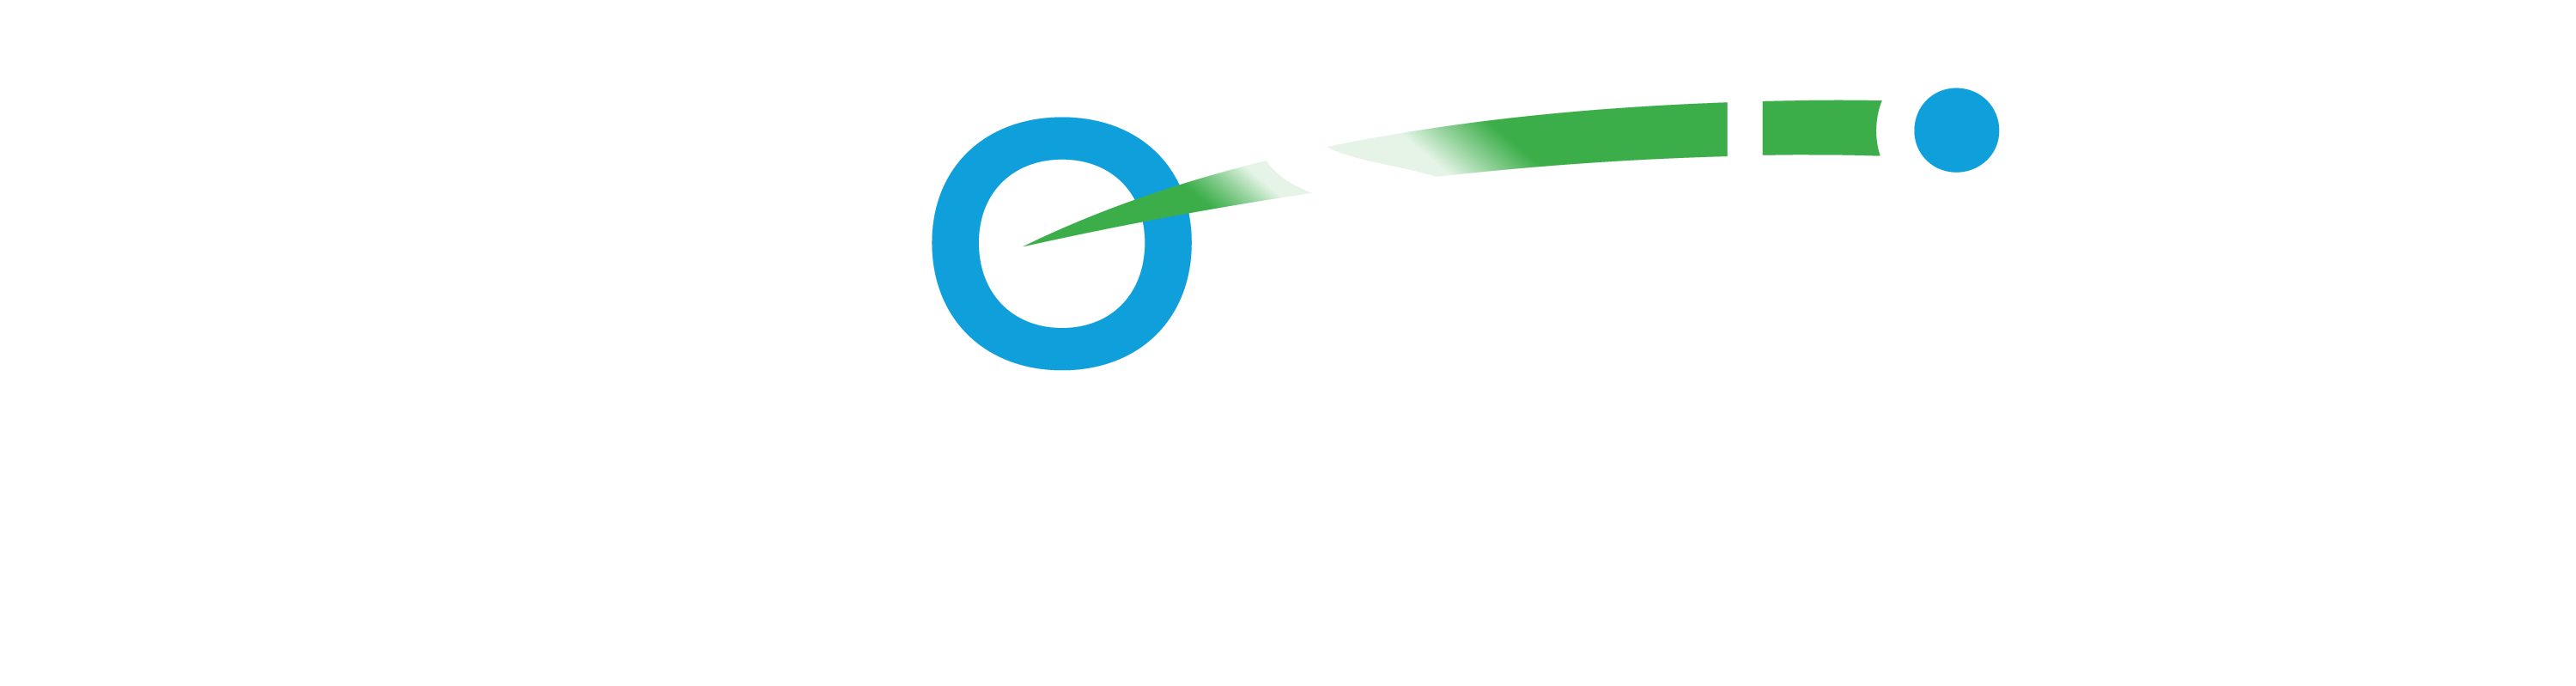 Nanostrike-Technology-Logo-REVERSED.png